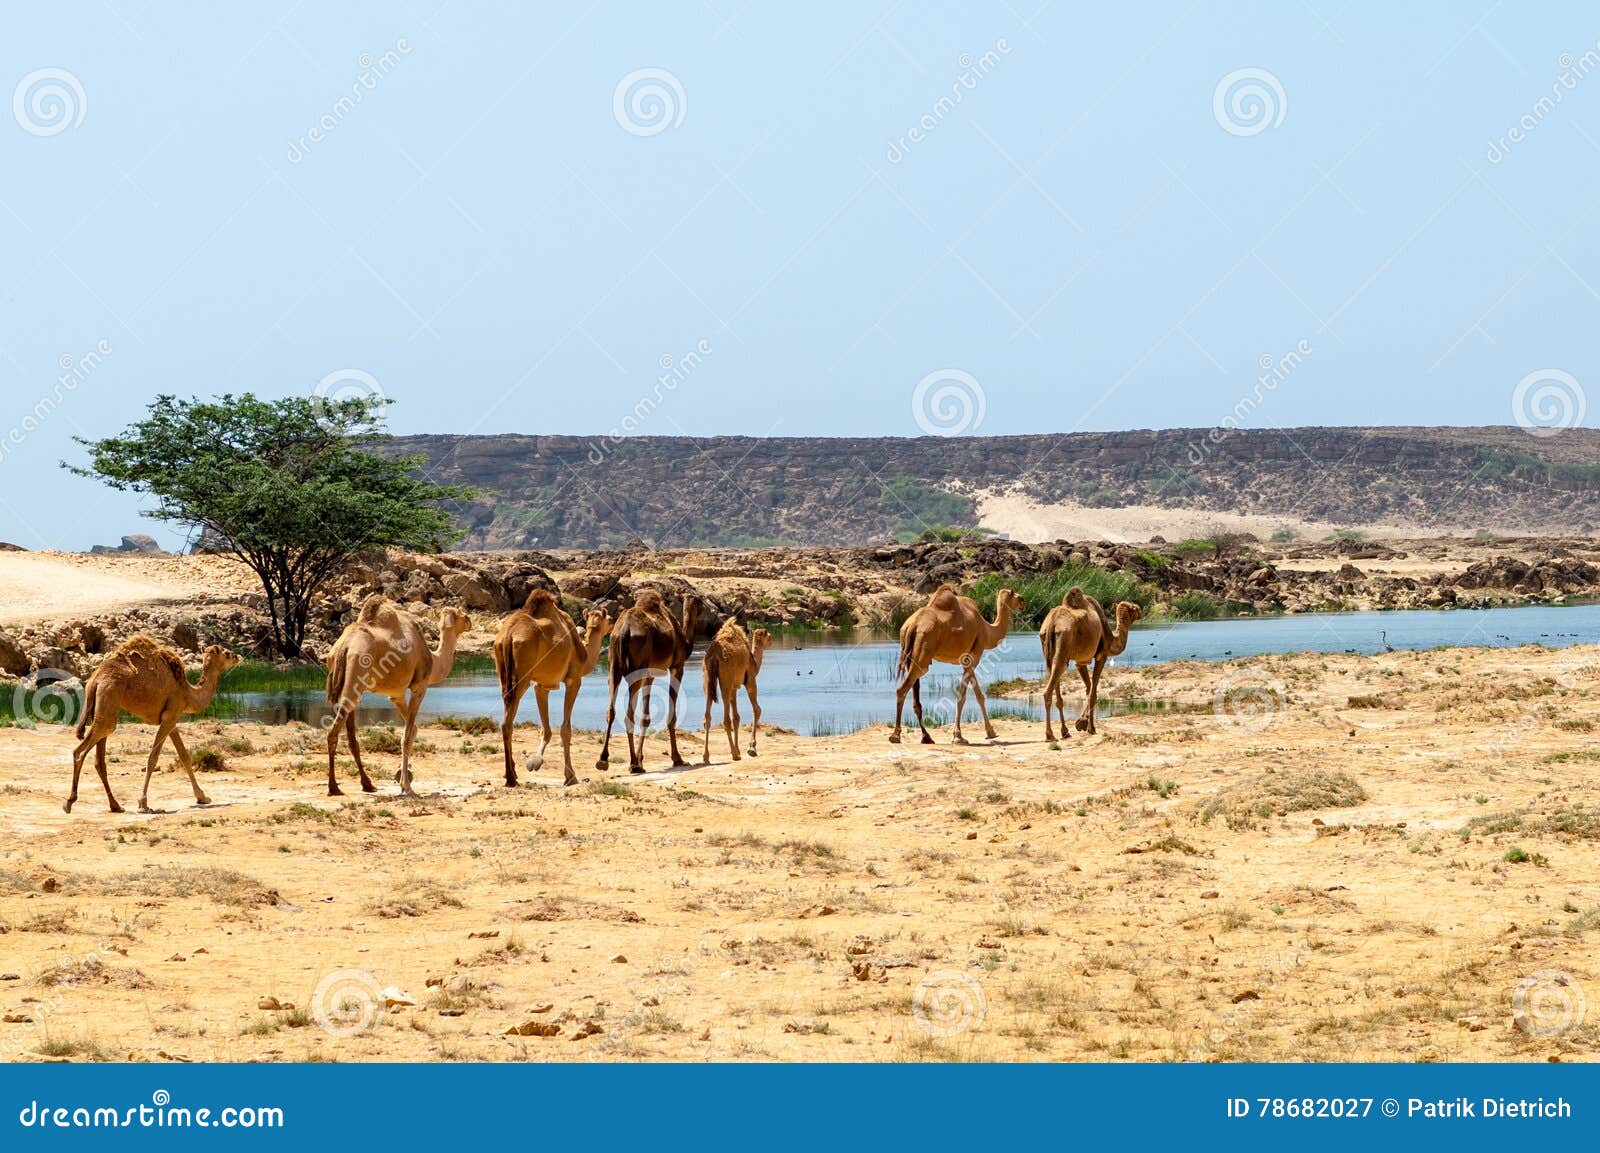 camels in the highlands of salalah, dhofar, oman